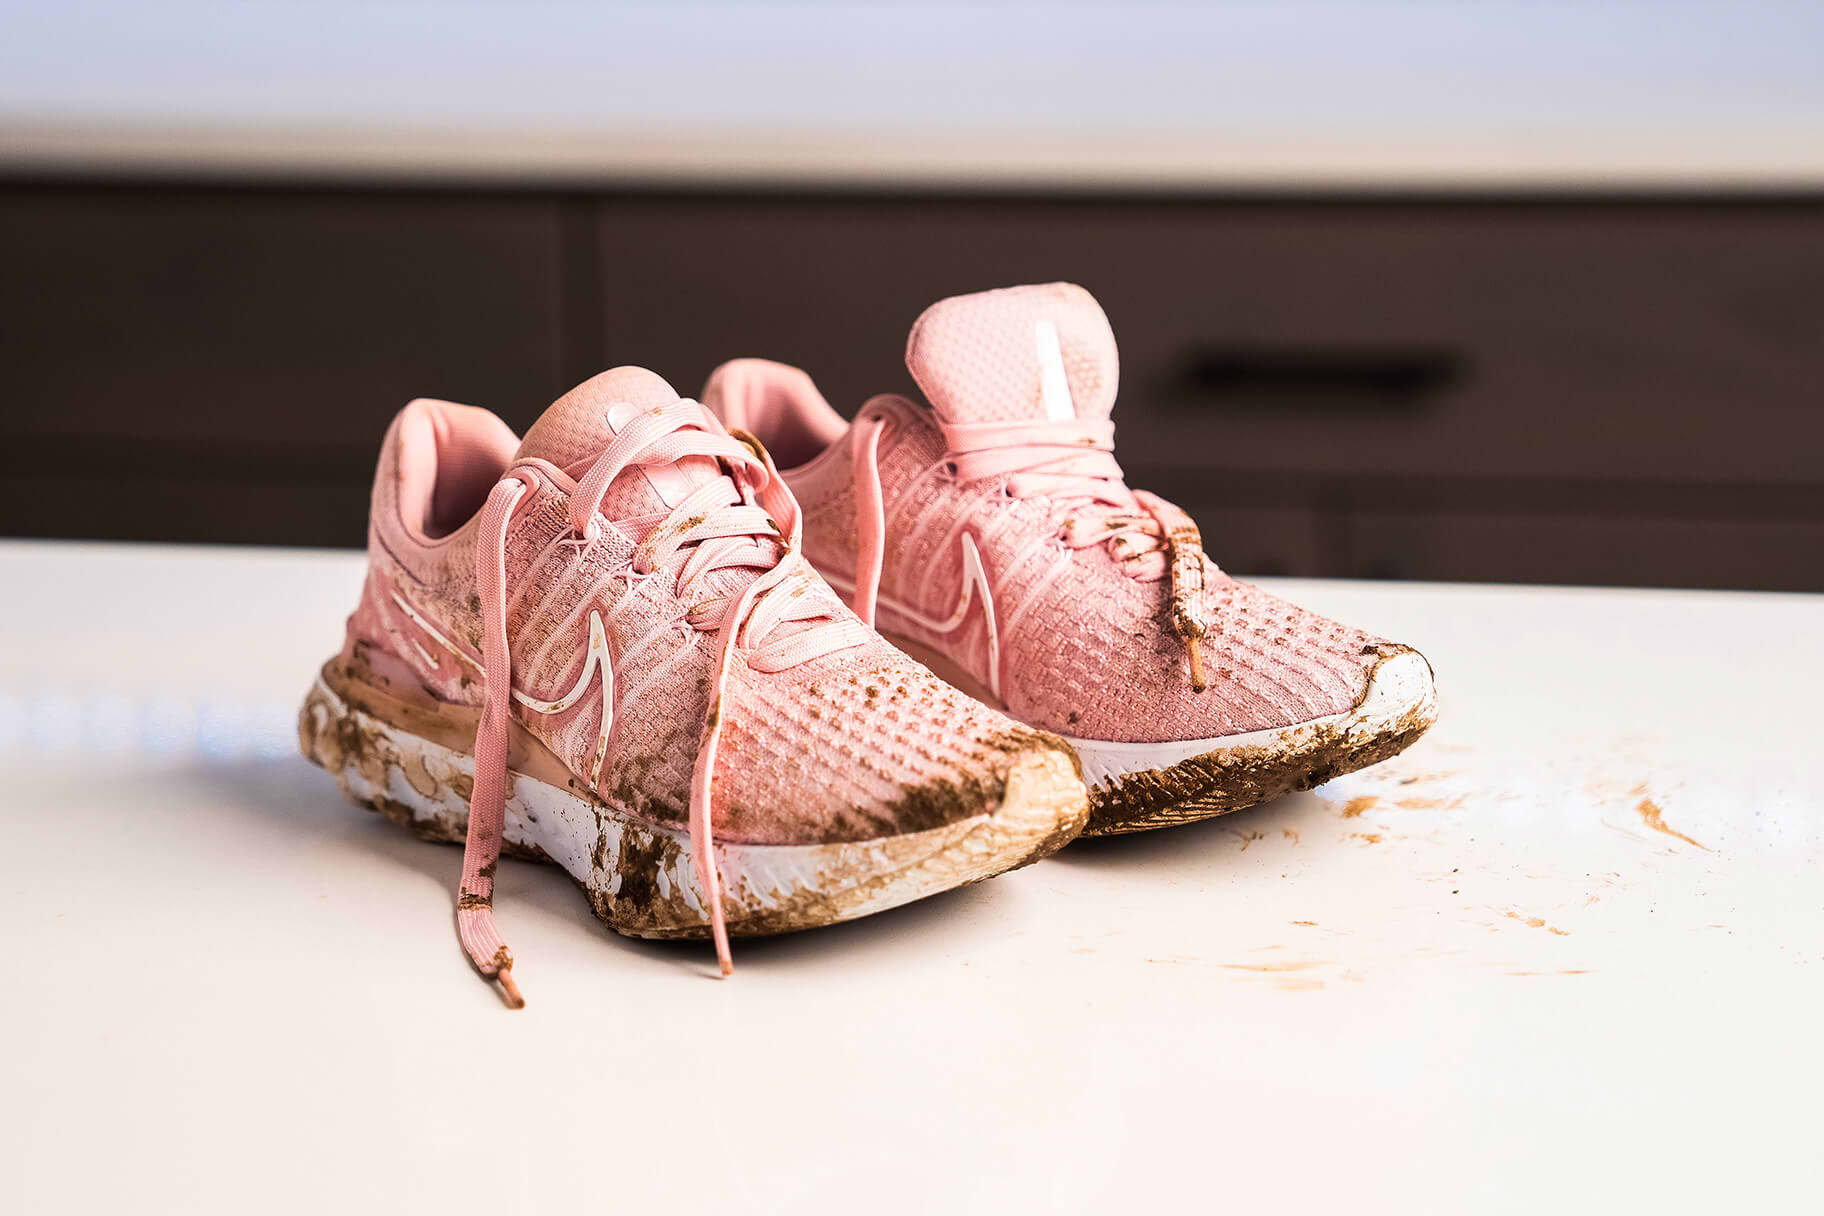 Cómo limpiar tu calzado 6 pasos fáciles. Nike